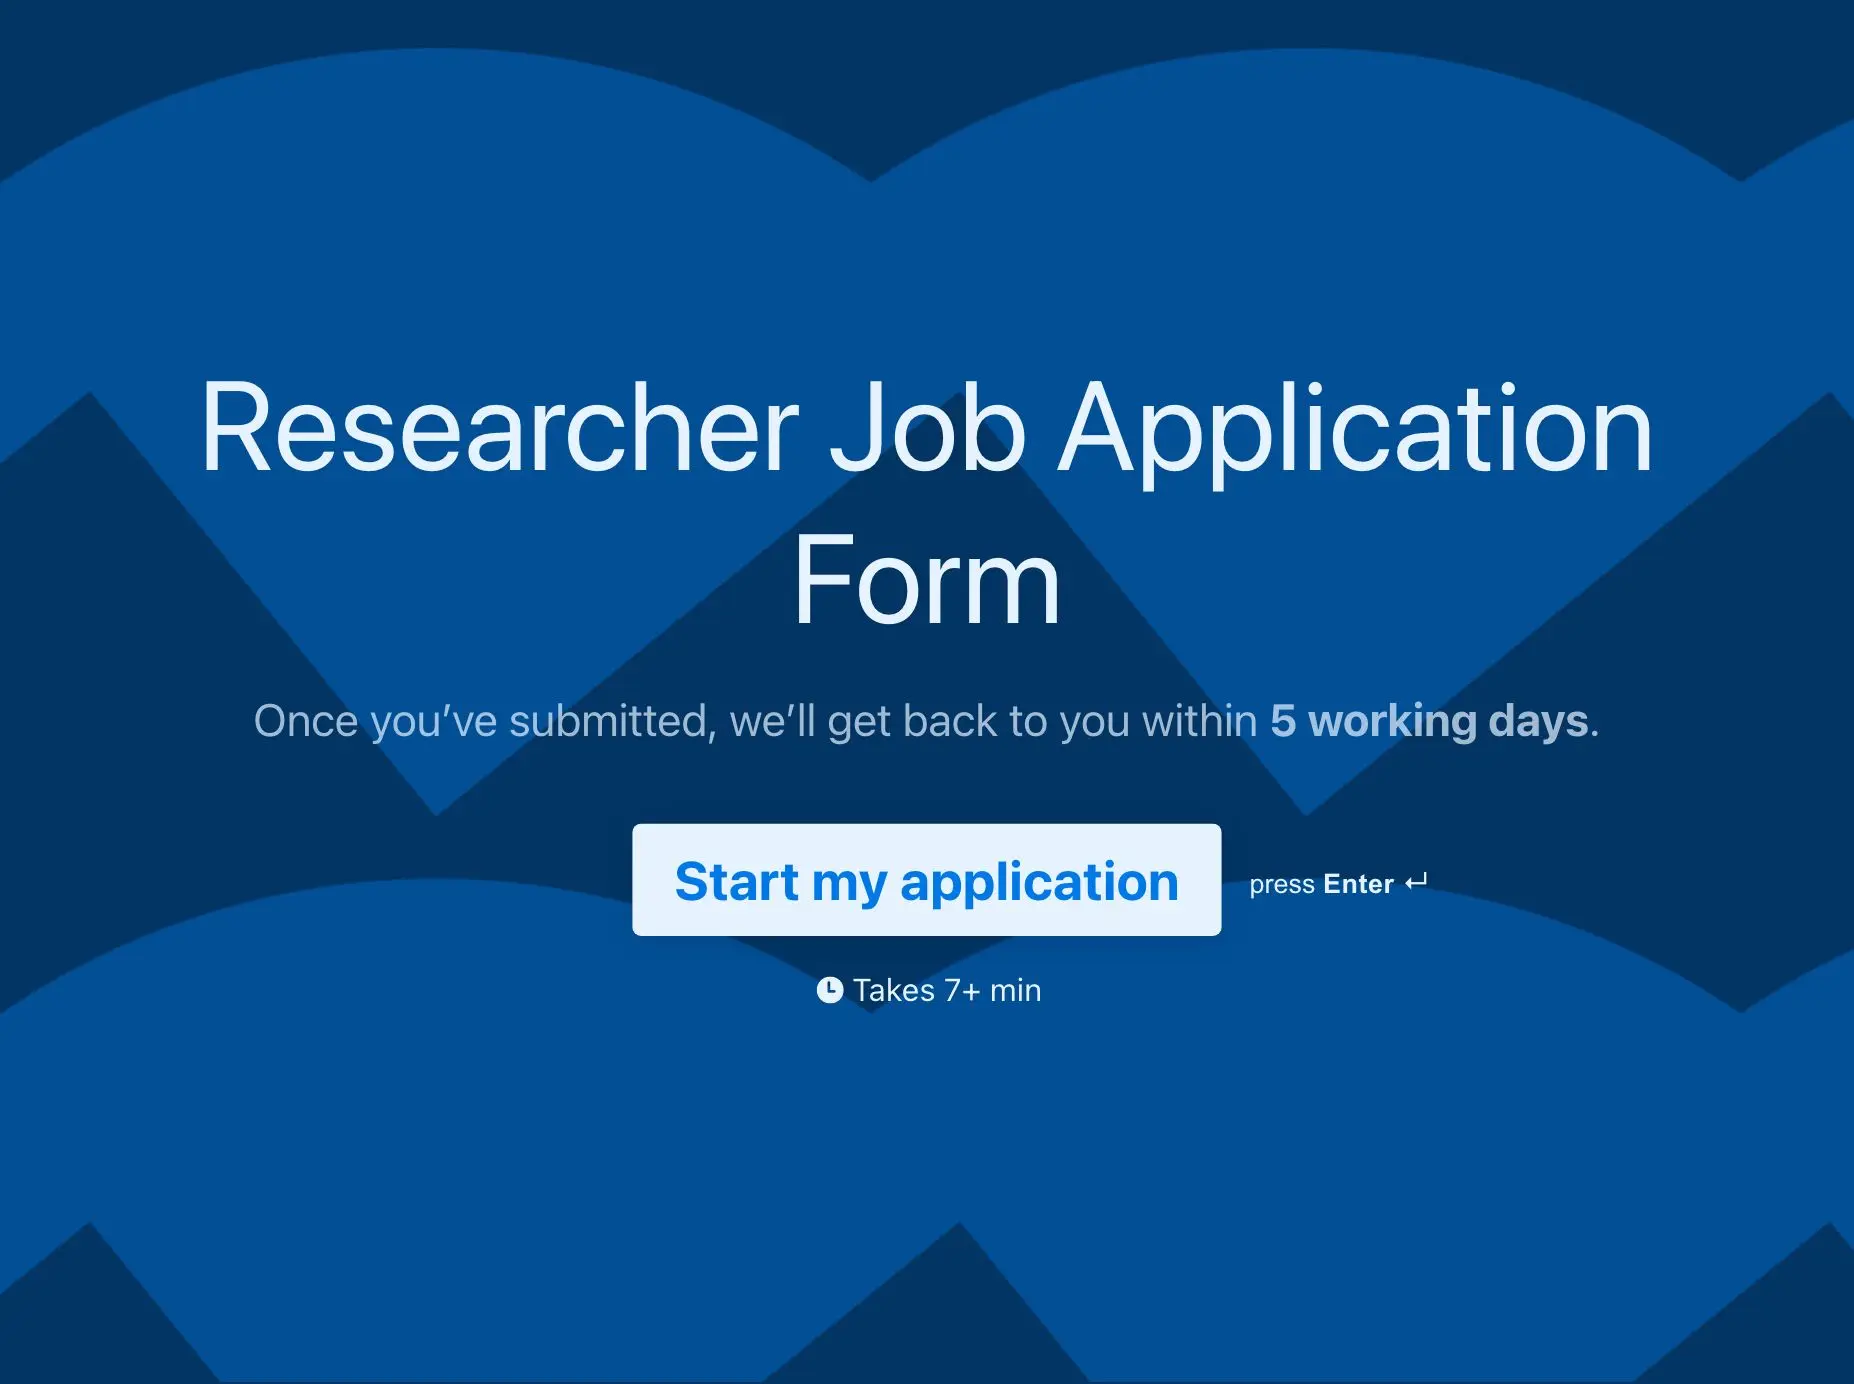 Researcher Job Application Form Template Hero